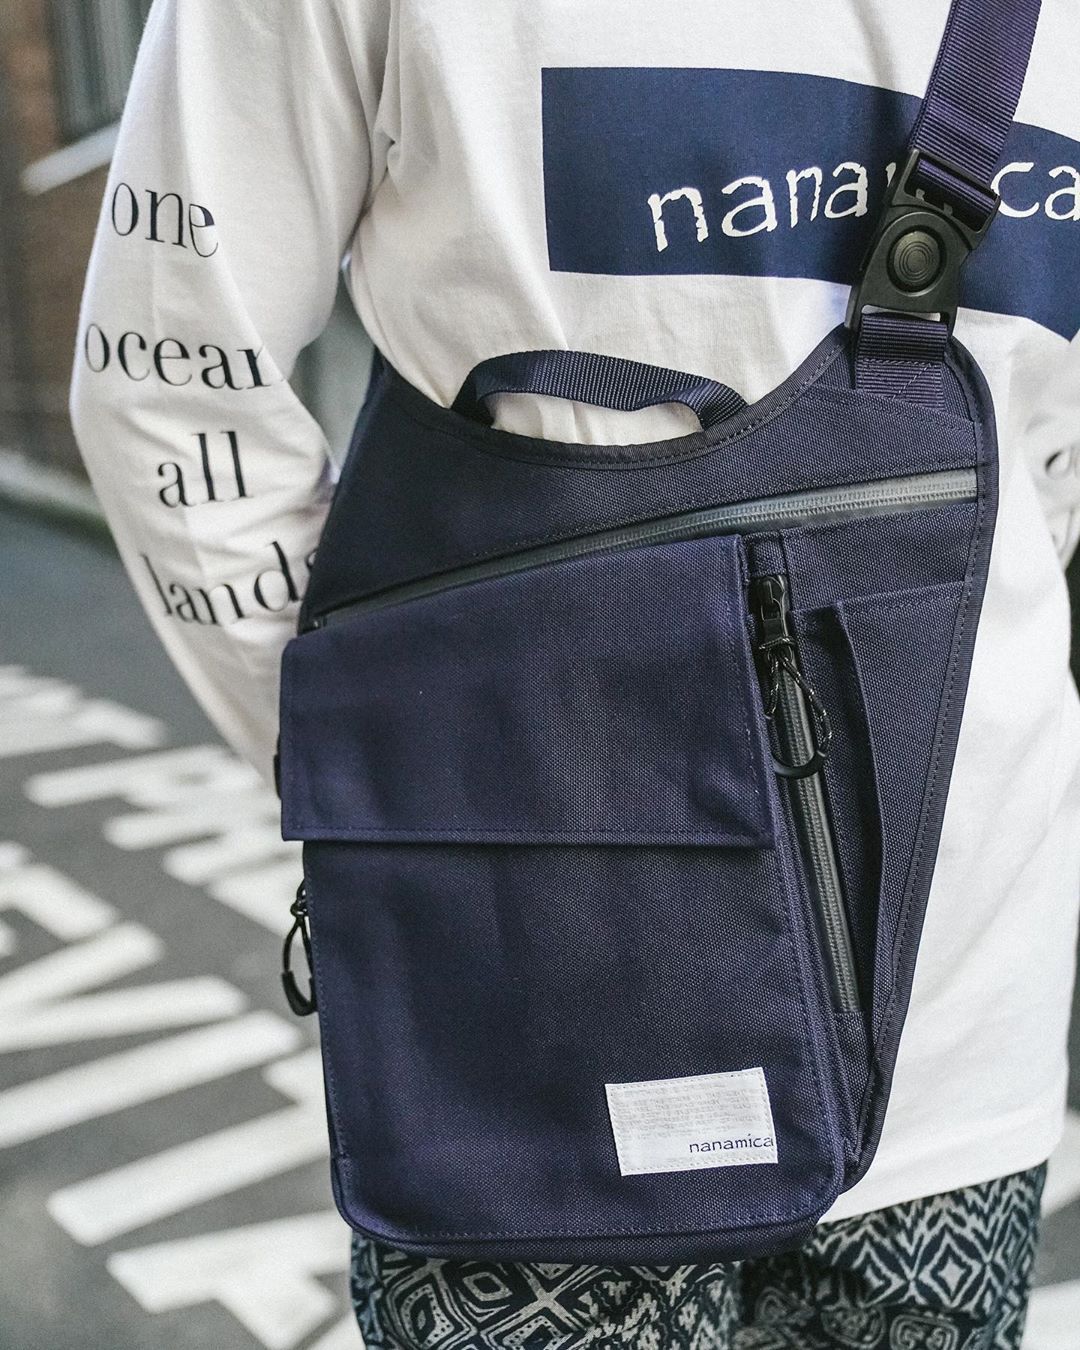 nanamica shoulder bag